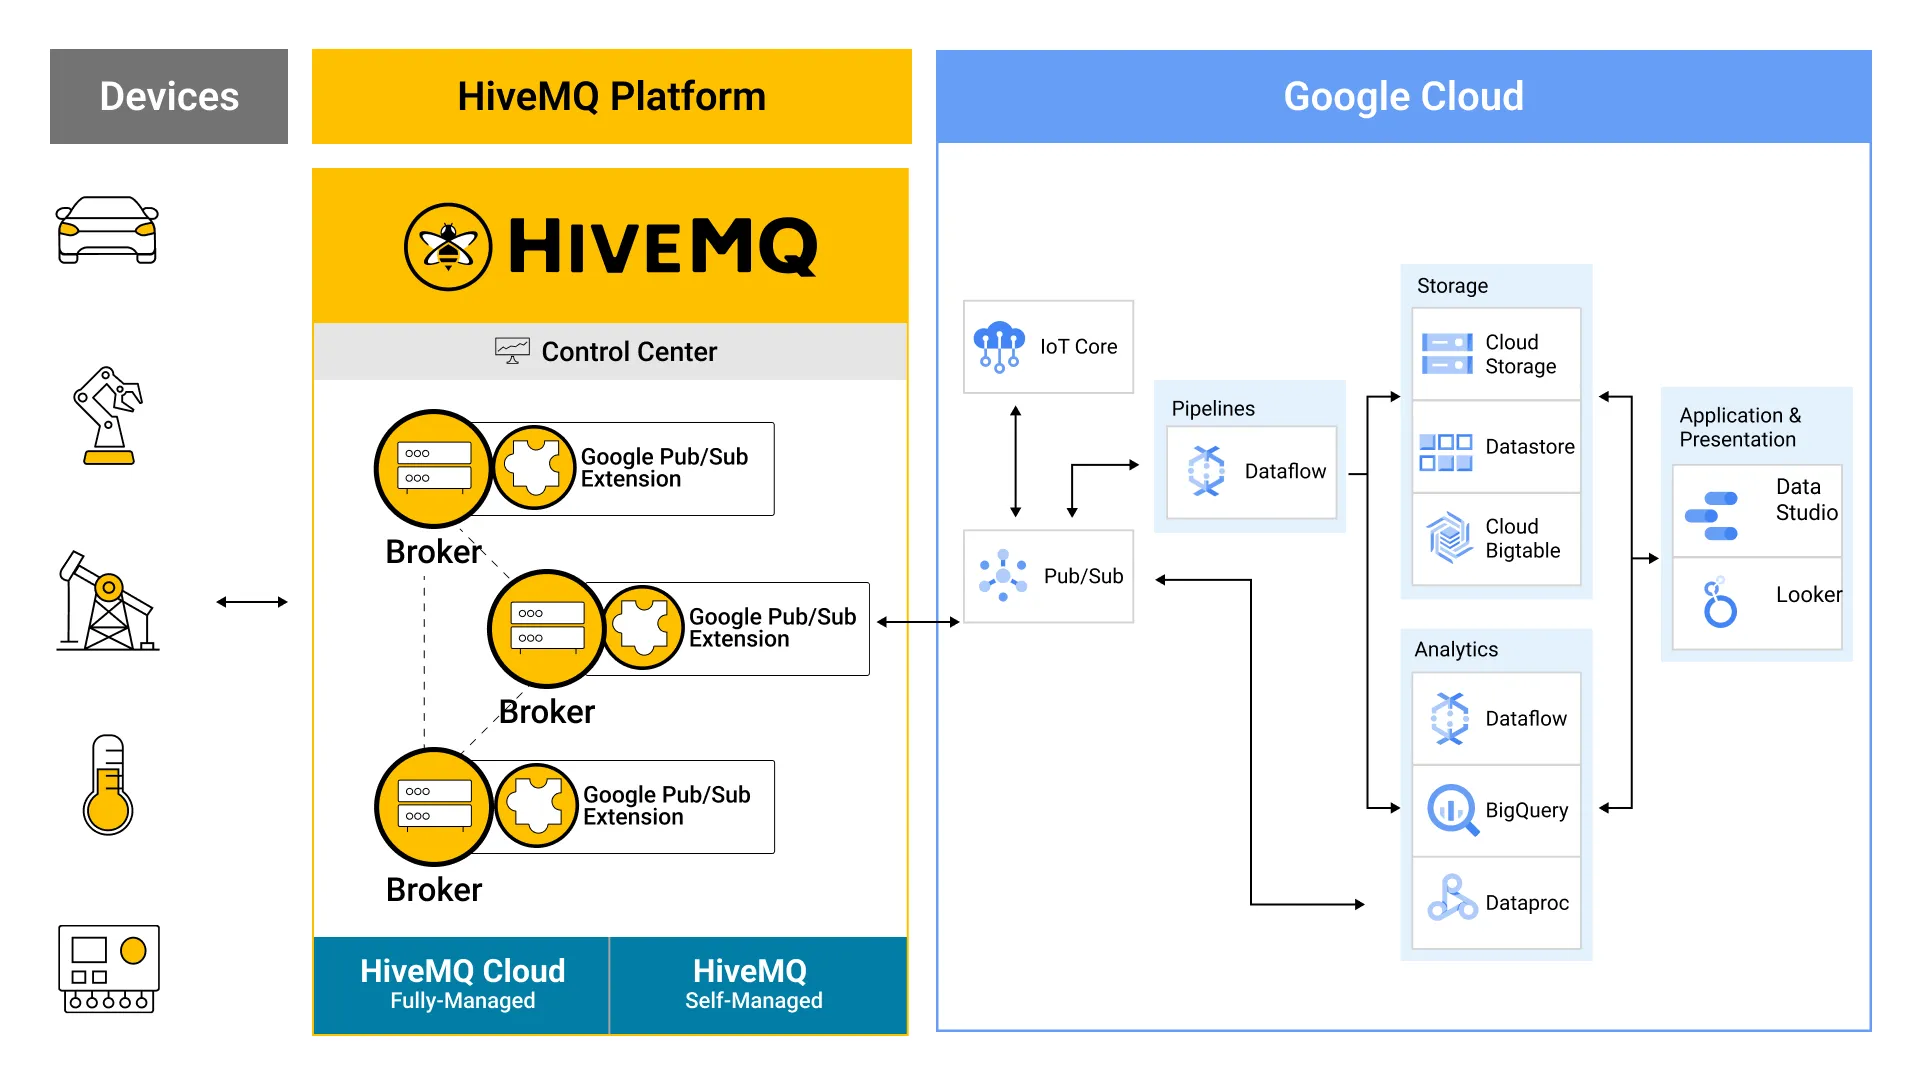 HiveMQ and Google Cloud Architecture